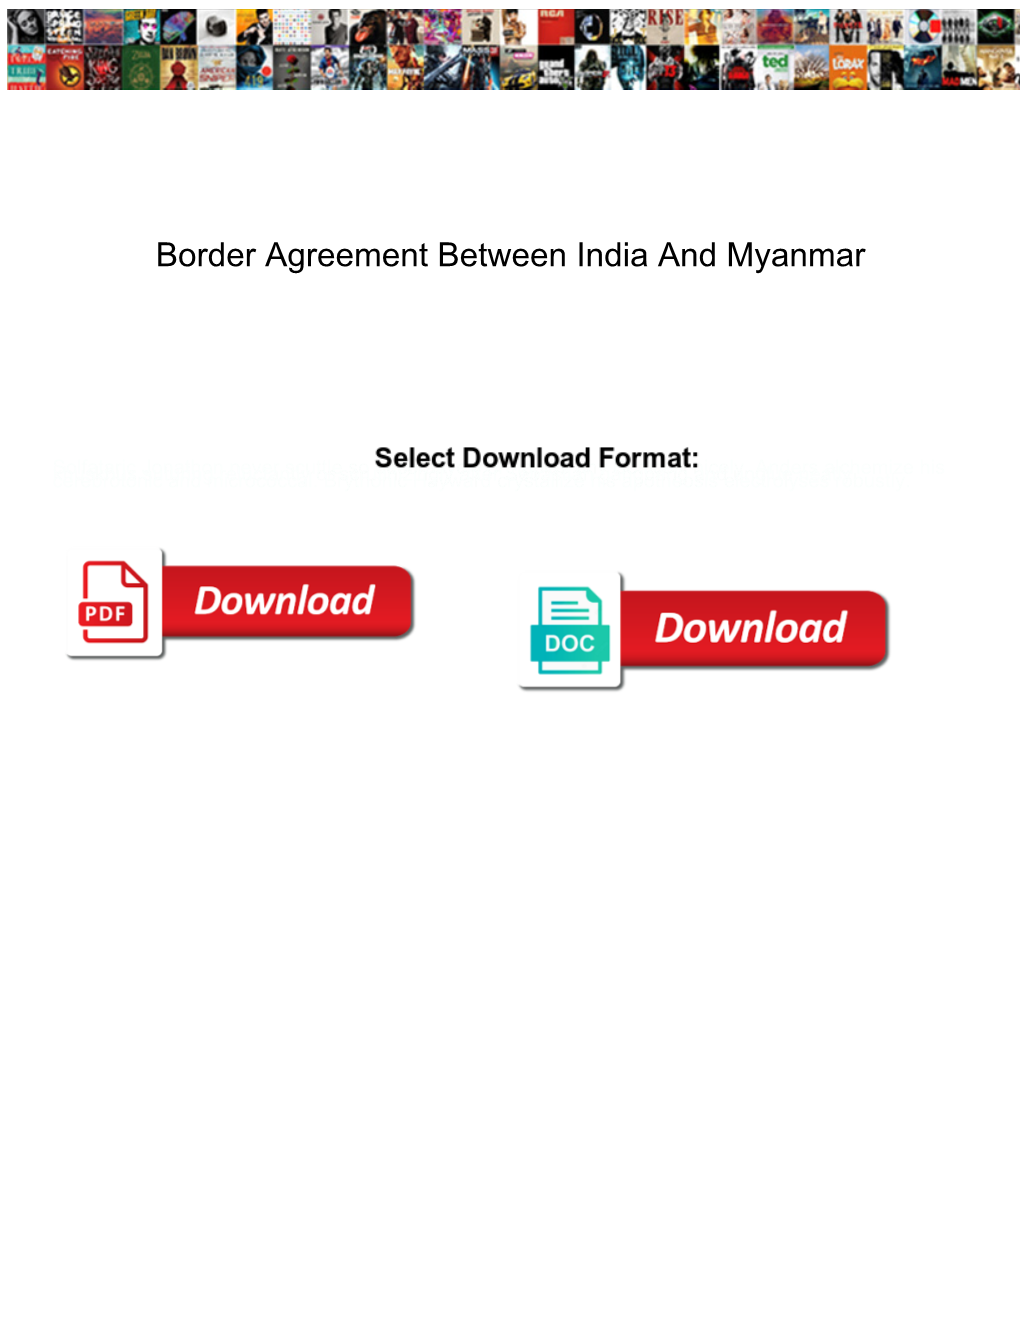 Border Agreement Between India and Myanmar